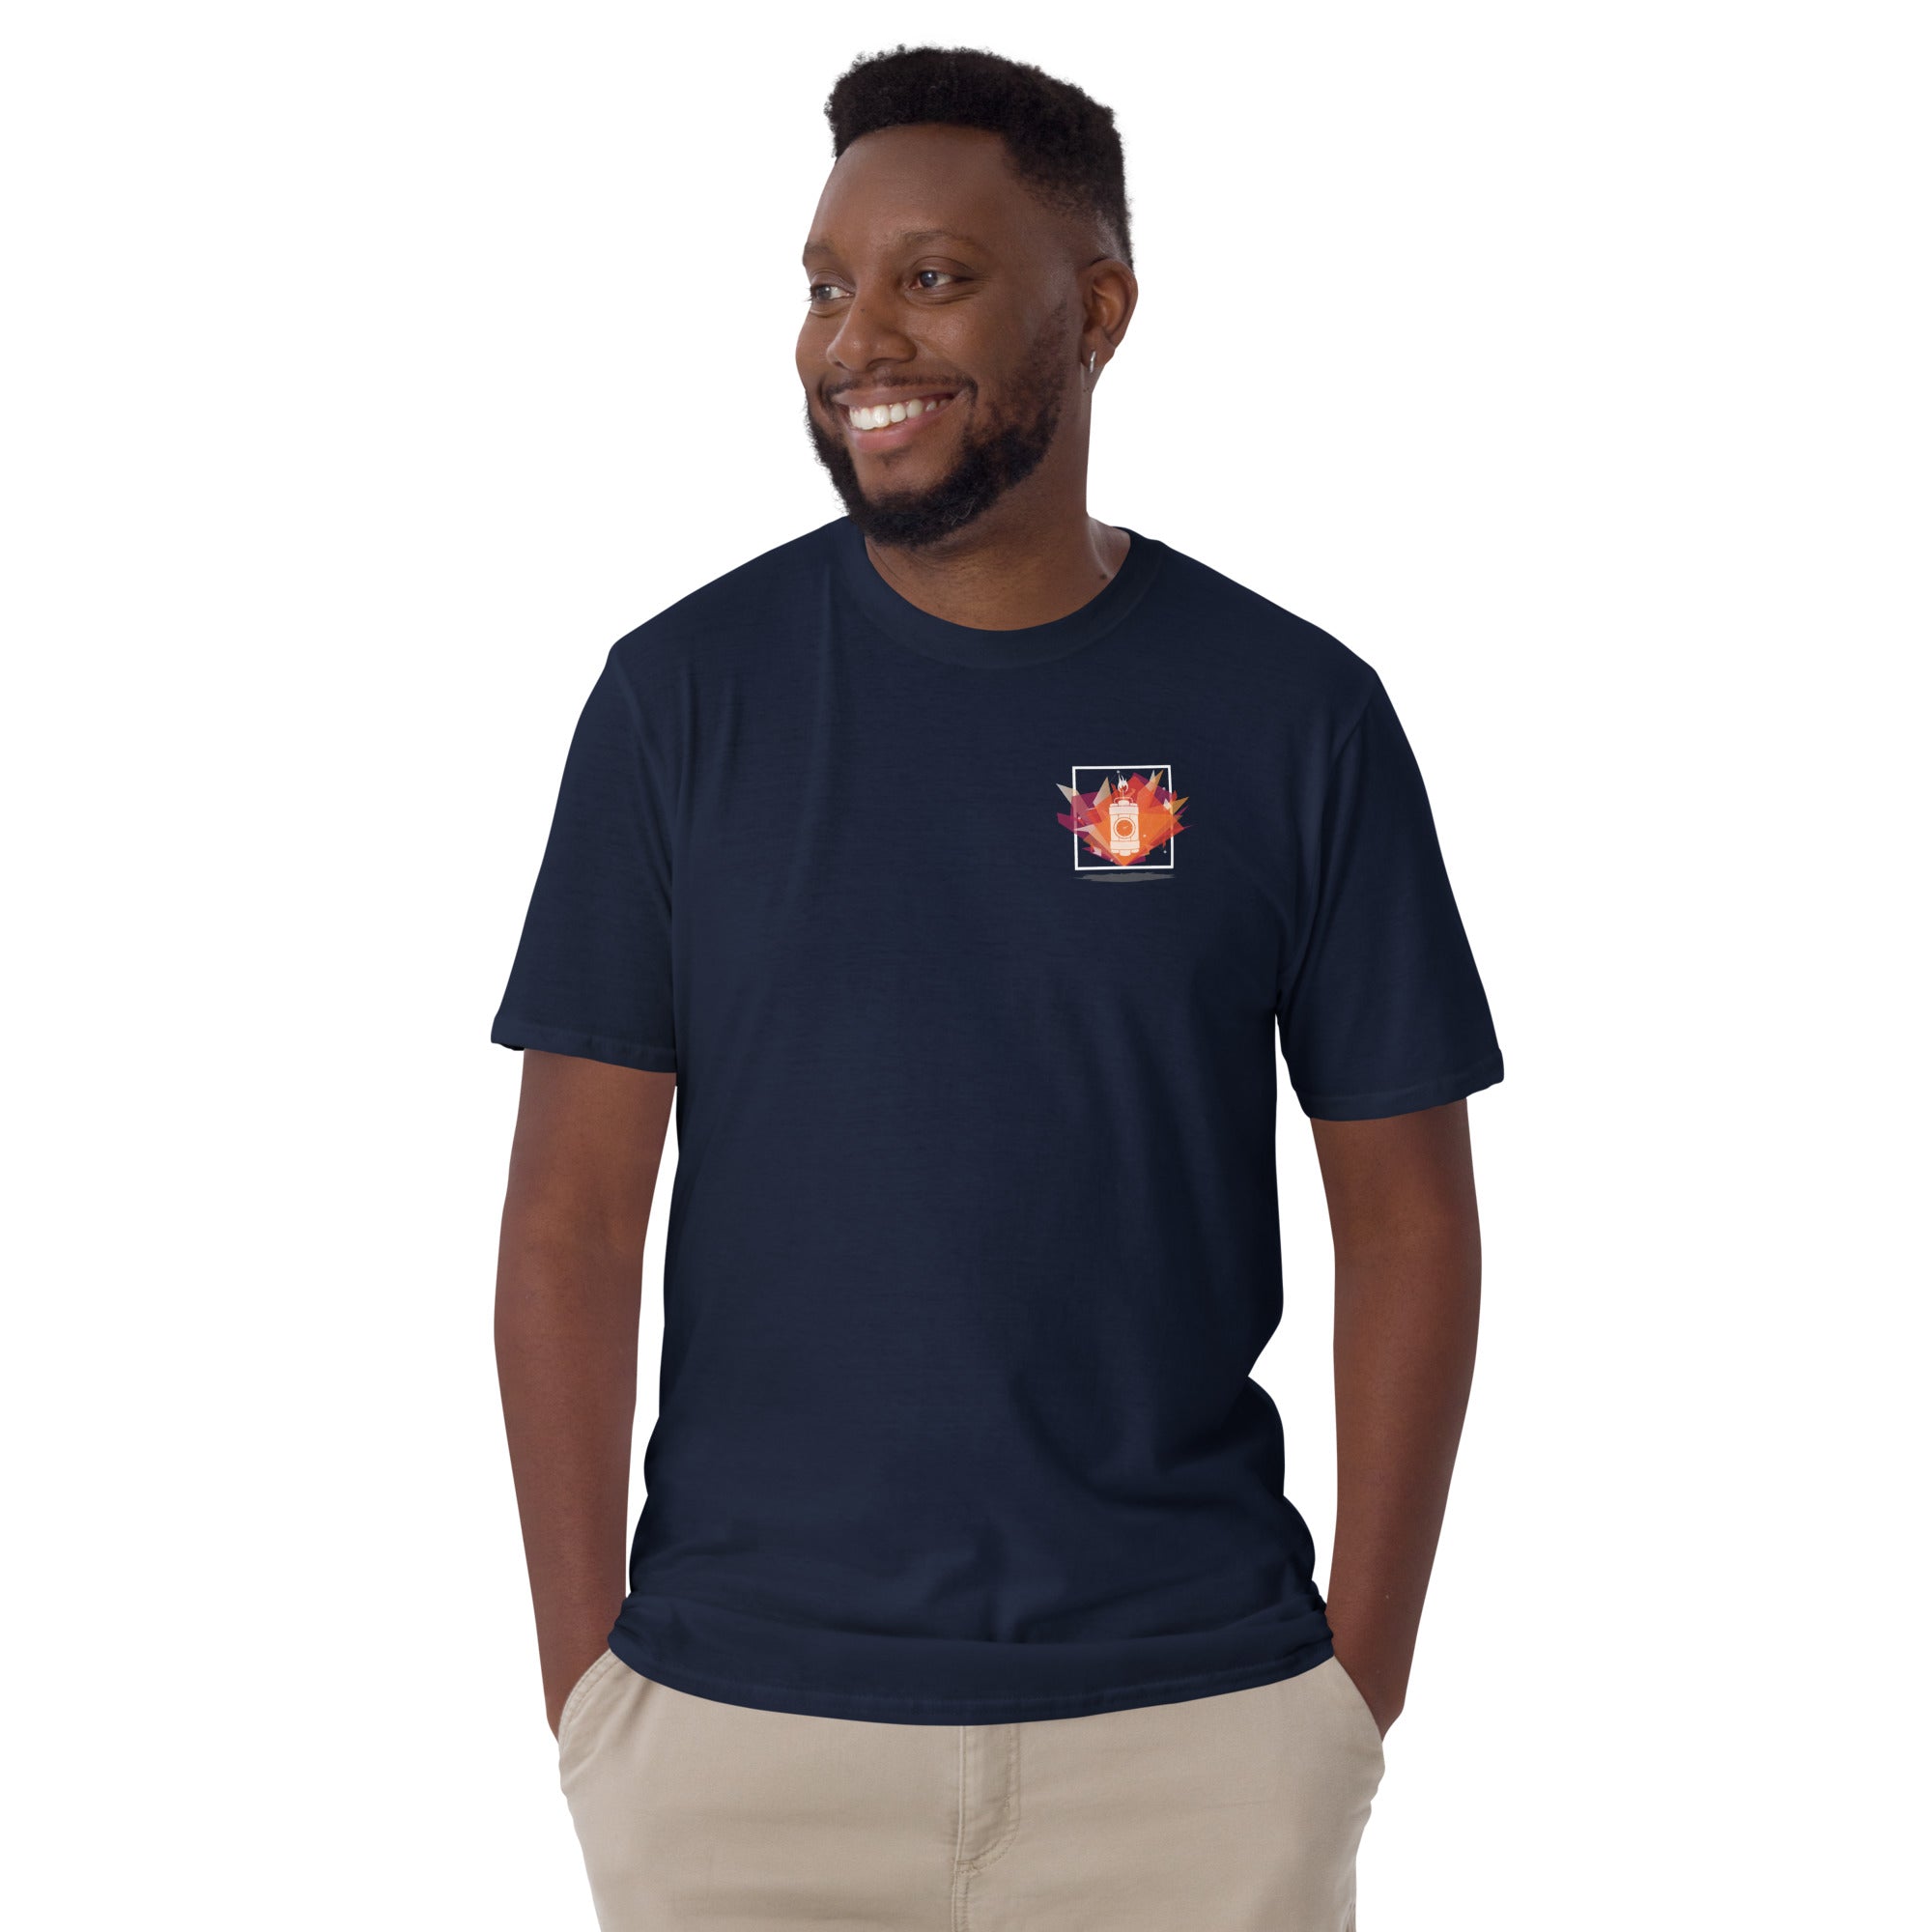 BOOM GOES THE DYNAMITE logo Unisex T-Shirt